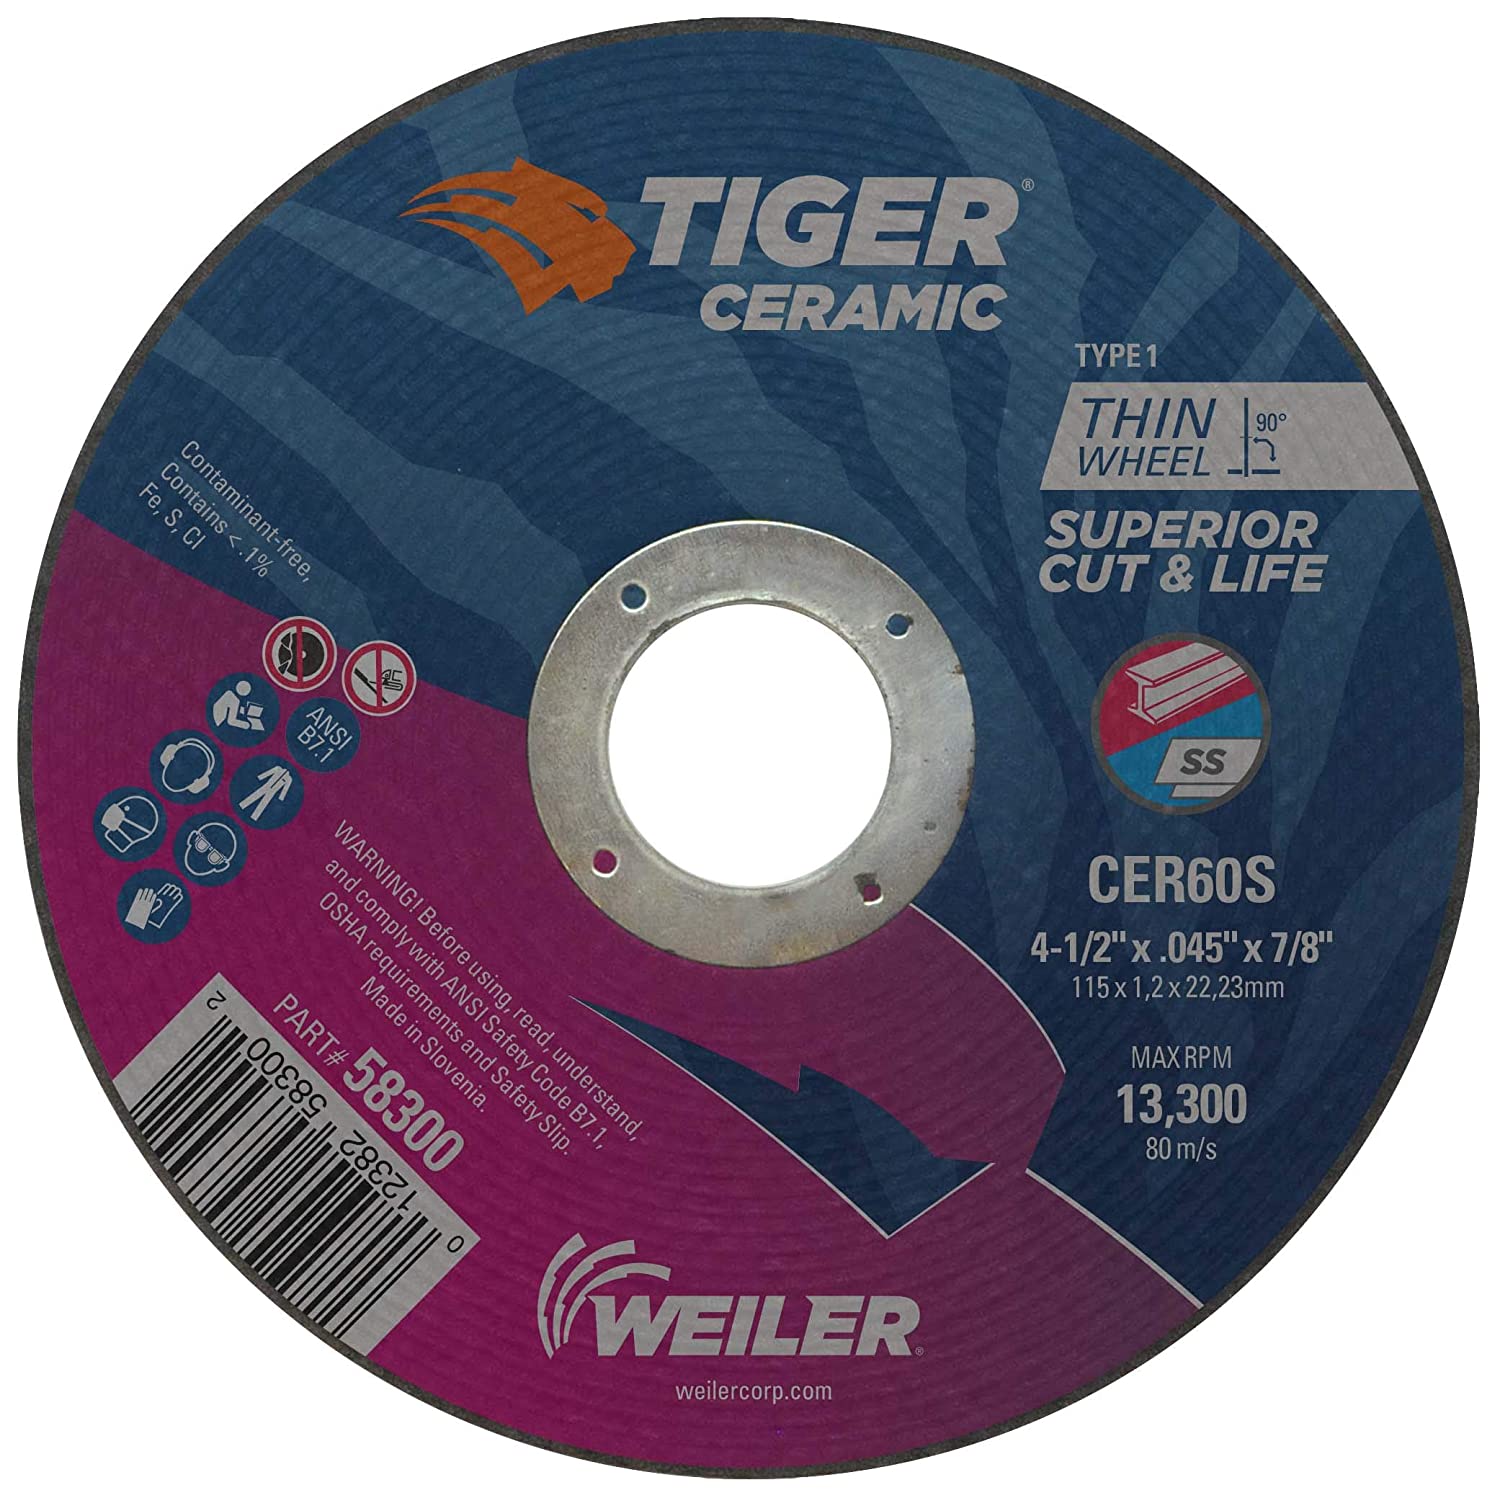 4-1/2" x .045" Weiler TIGER CERAMIC Type 1 Cut-Off Wheel CER60S 7/8 A.H.